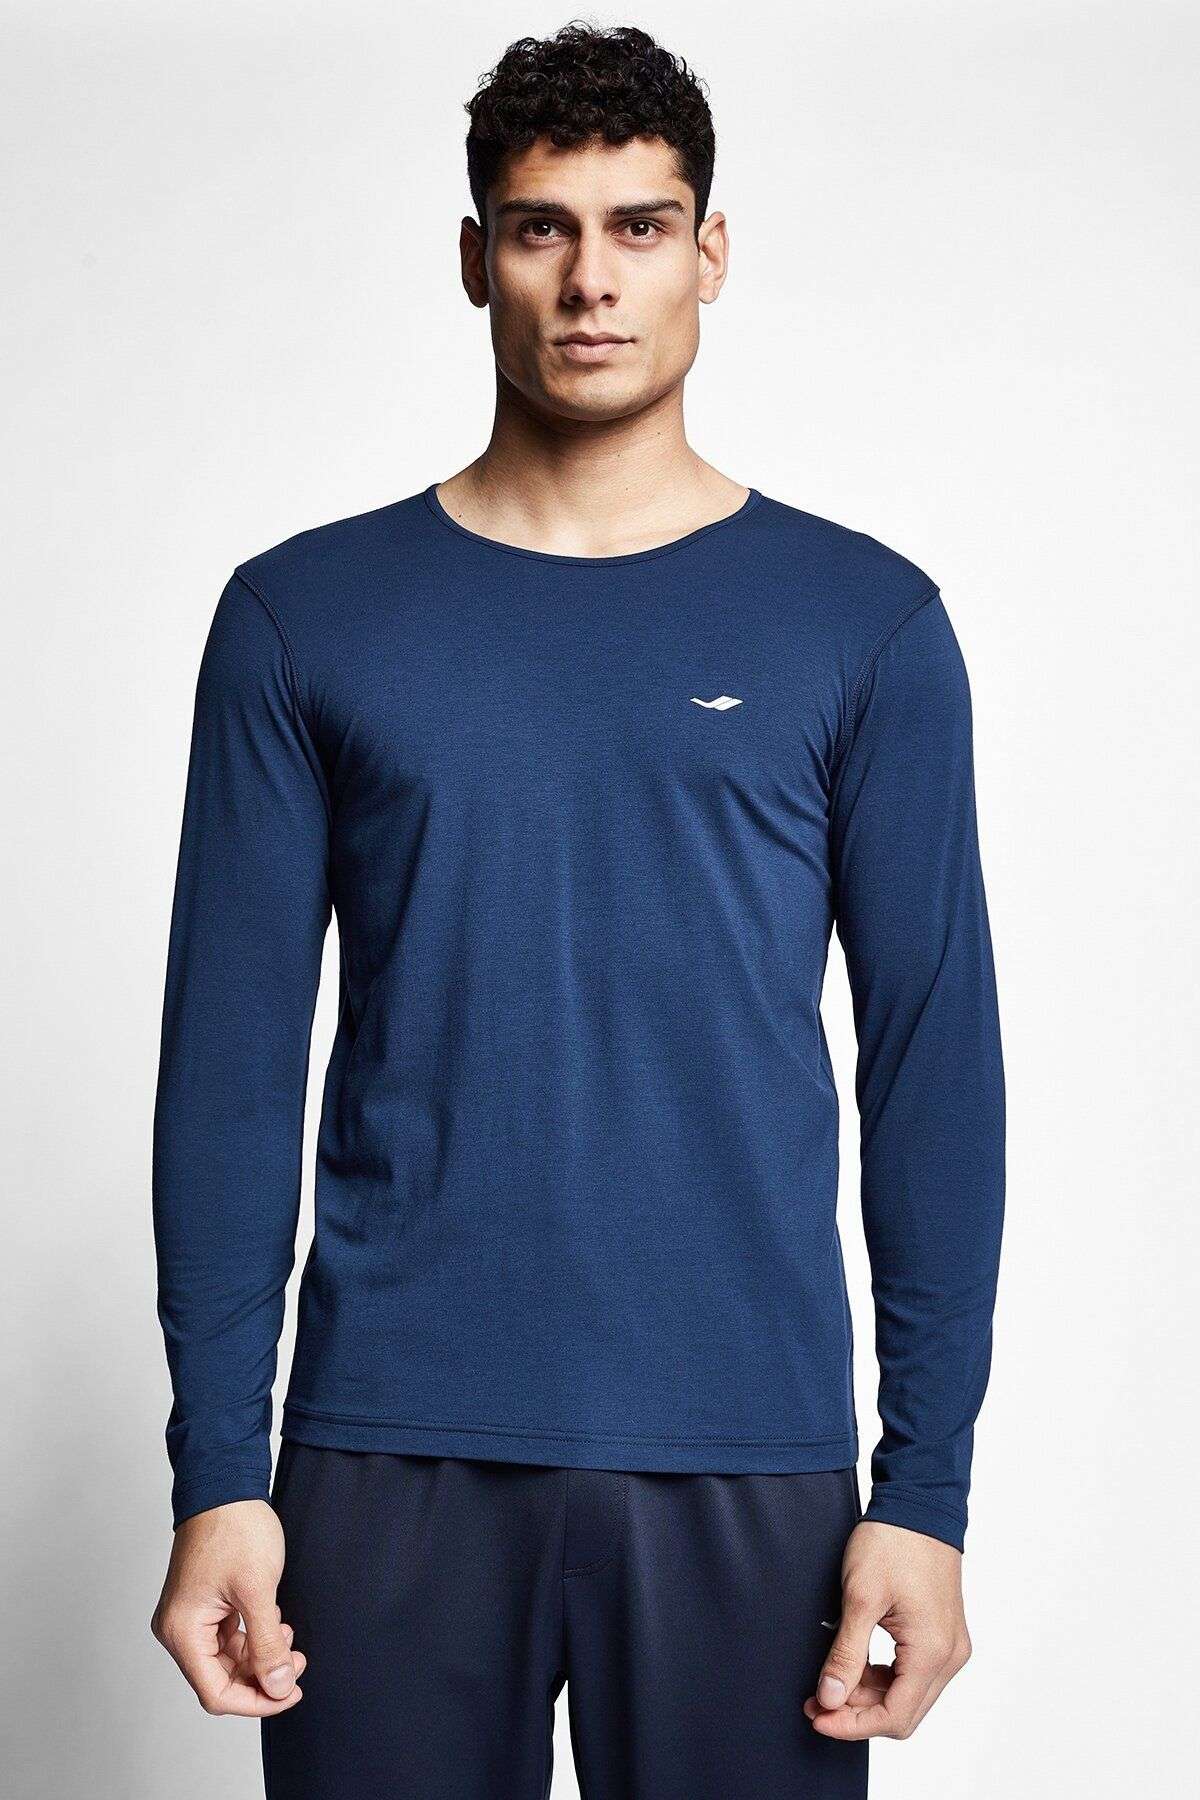 Lescon Safir Mavi Erkek Uzun Kollu T-shirt 21S-1236-21N